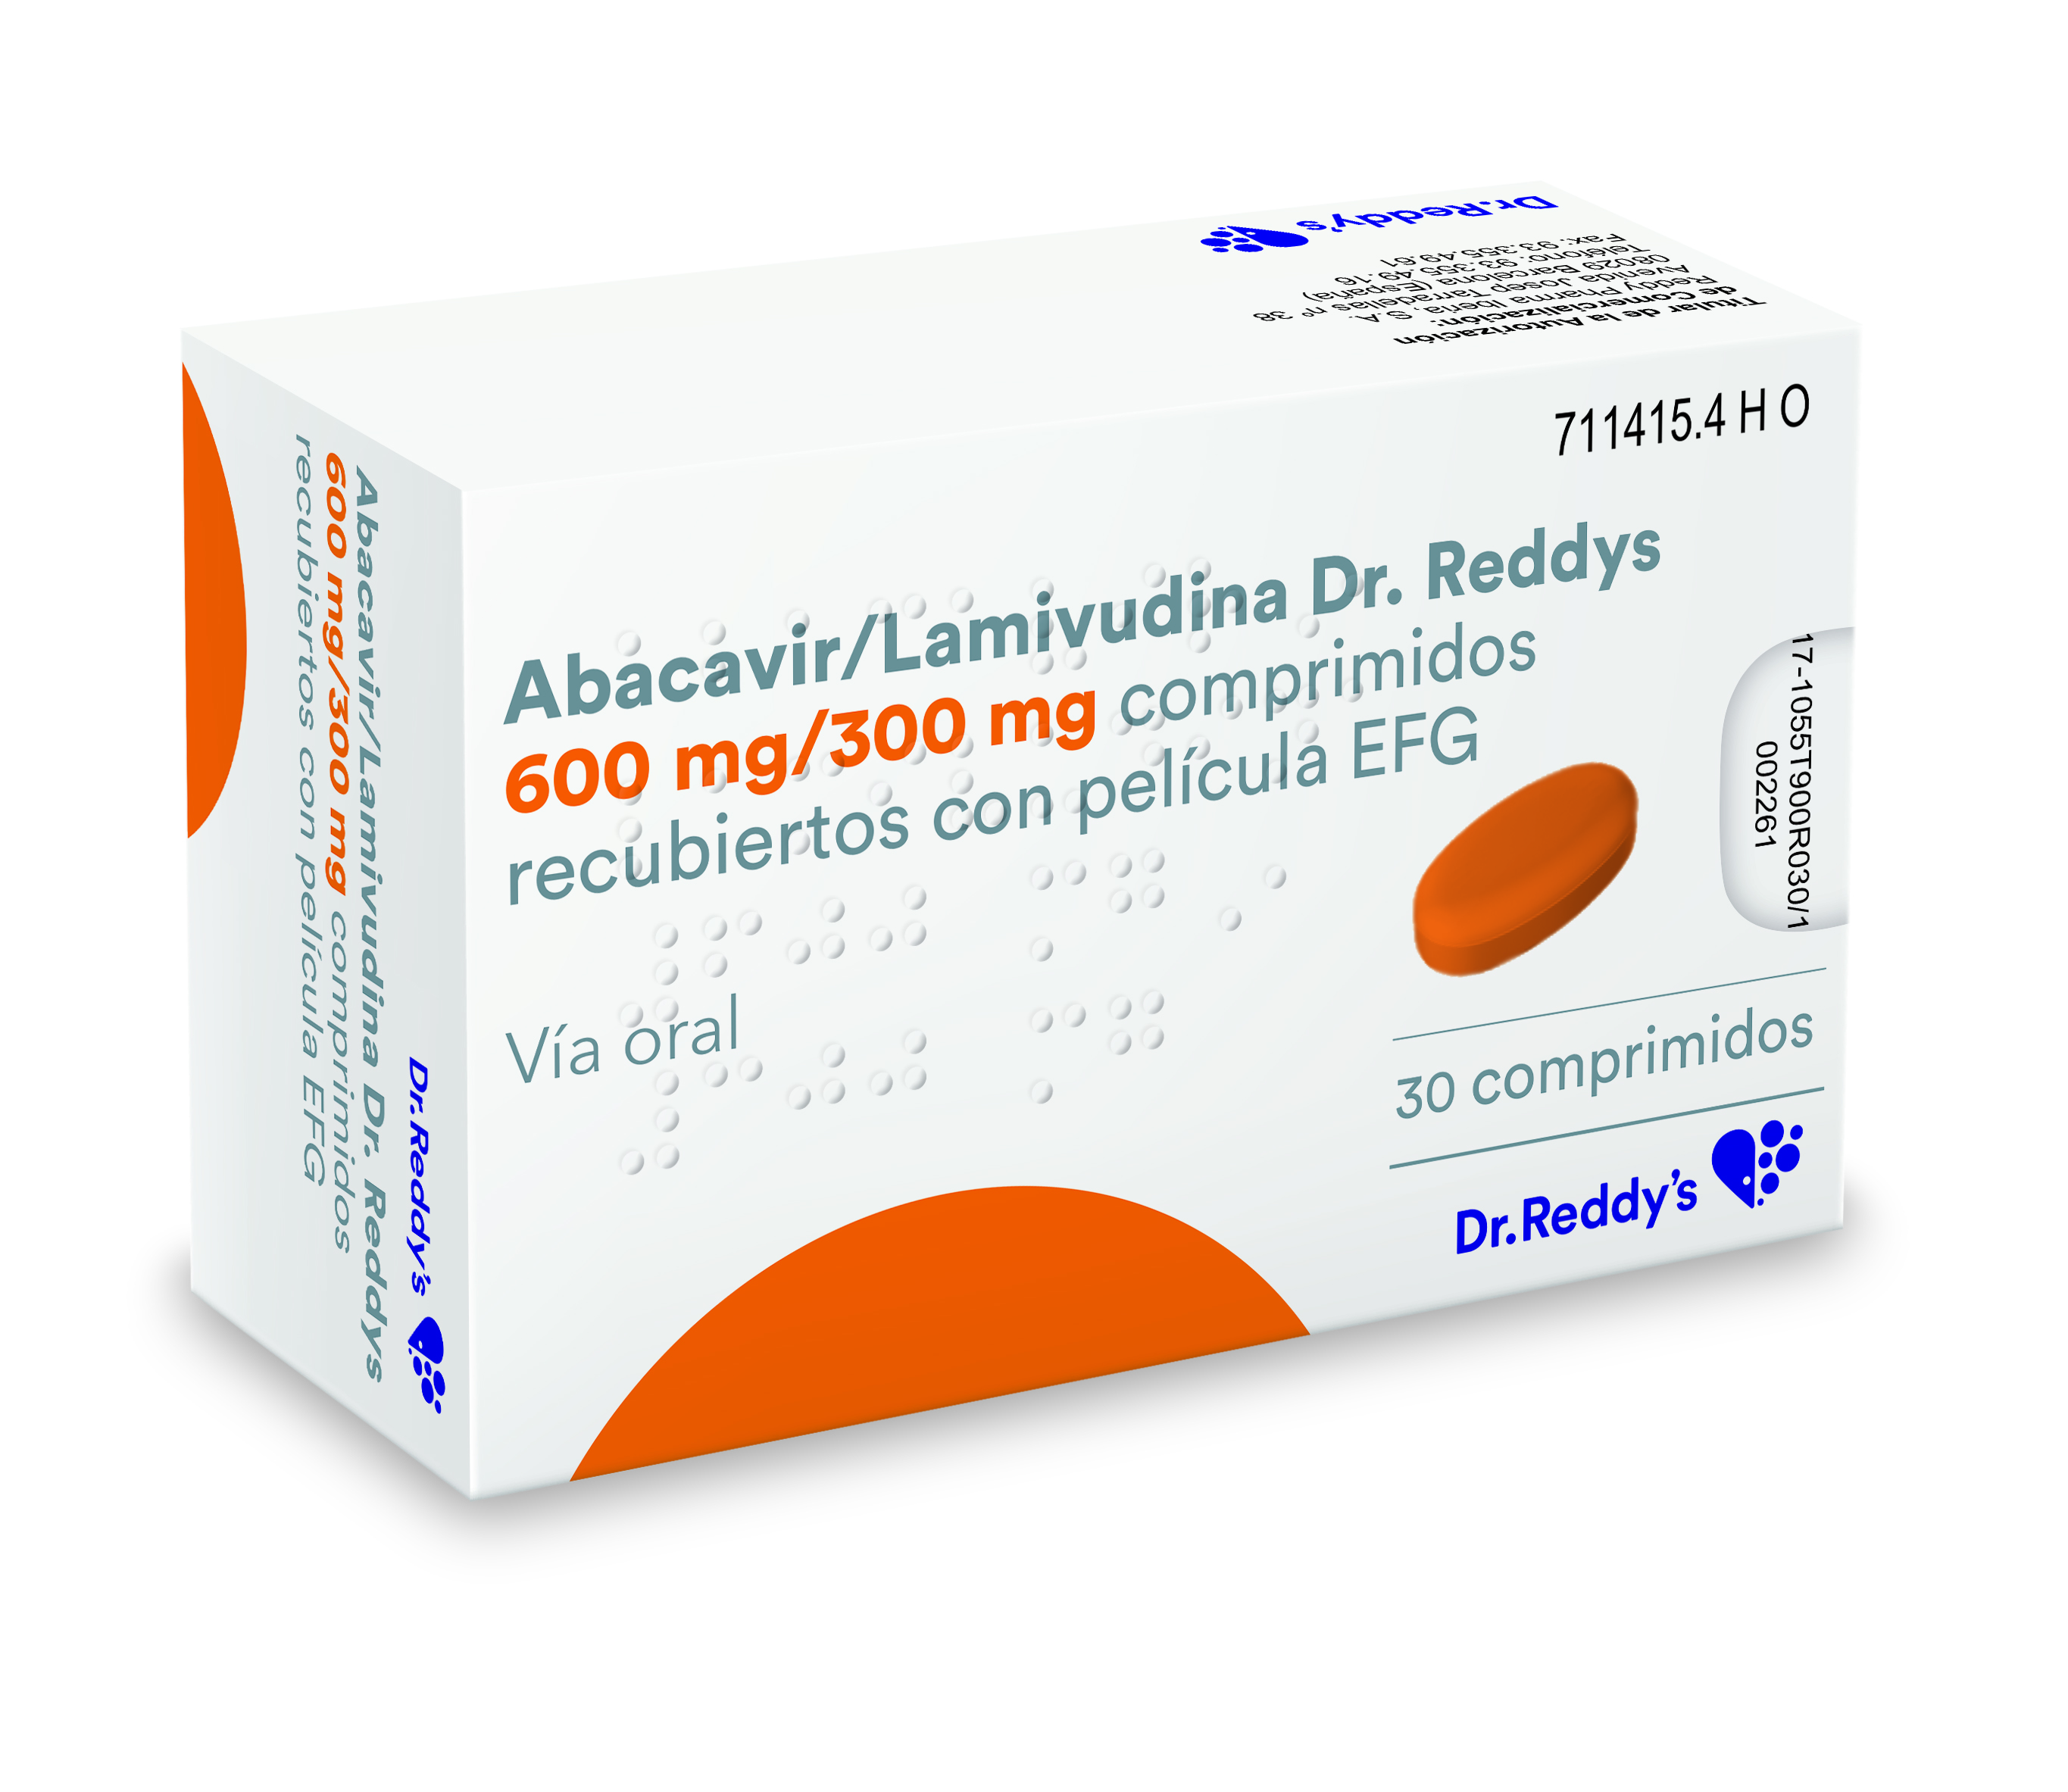 ABACAVIR/LAMIVUDINA DR. REDDYS EFG